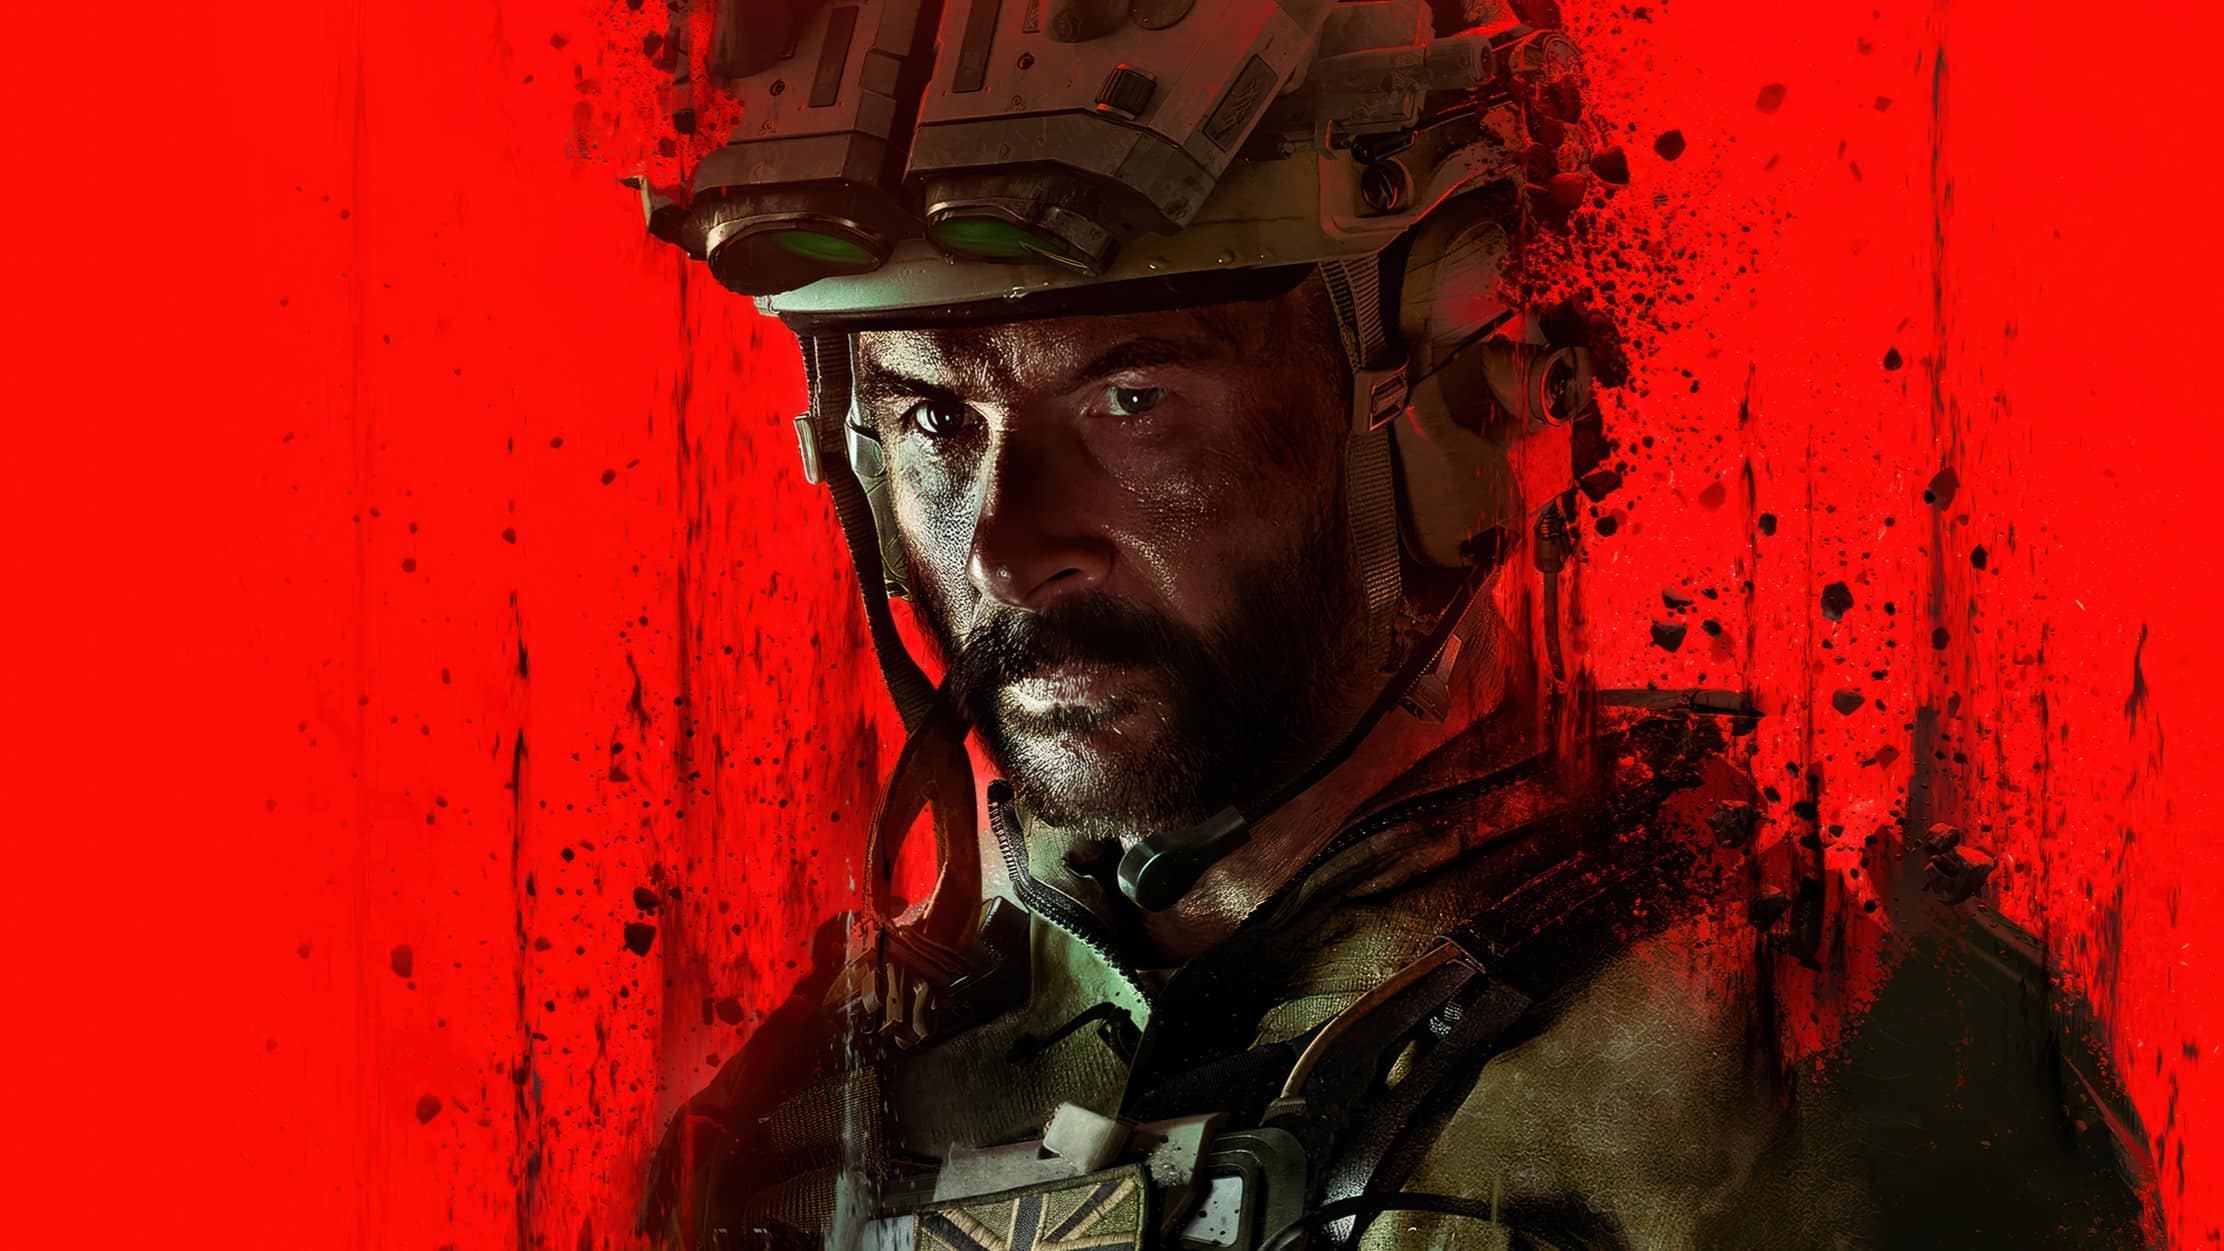 Call of Duty: Modern Warfare Review